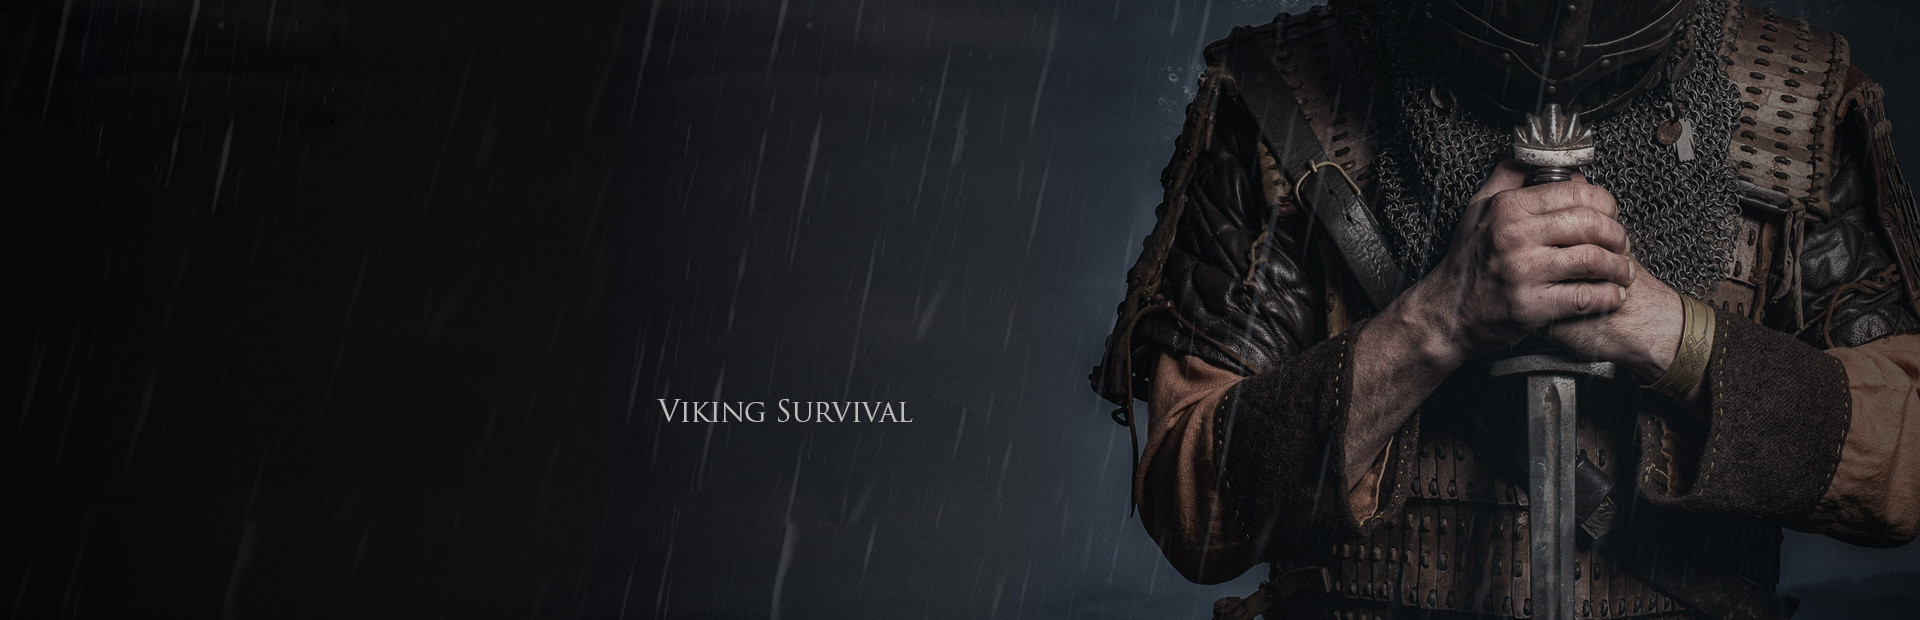 Valnir Rok Survival RPG cover image